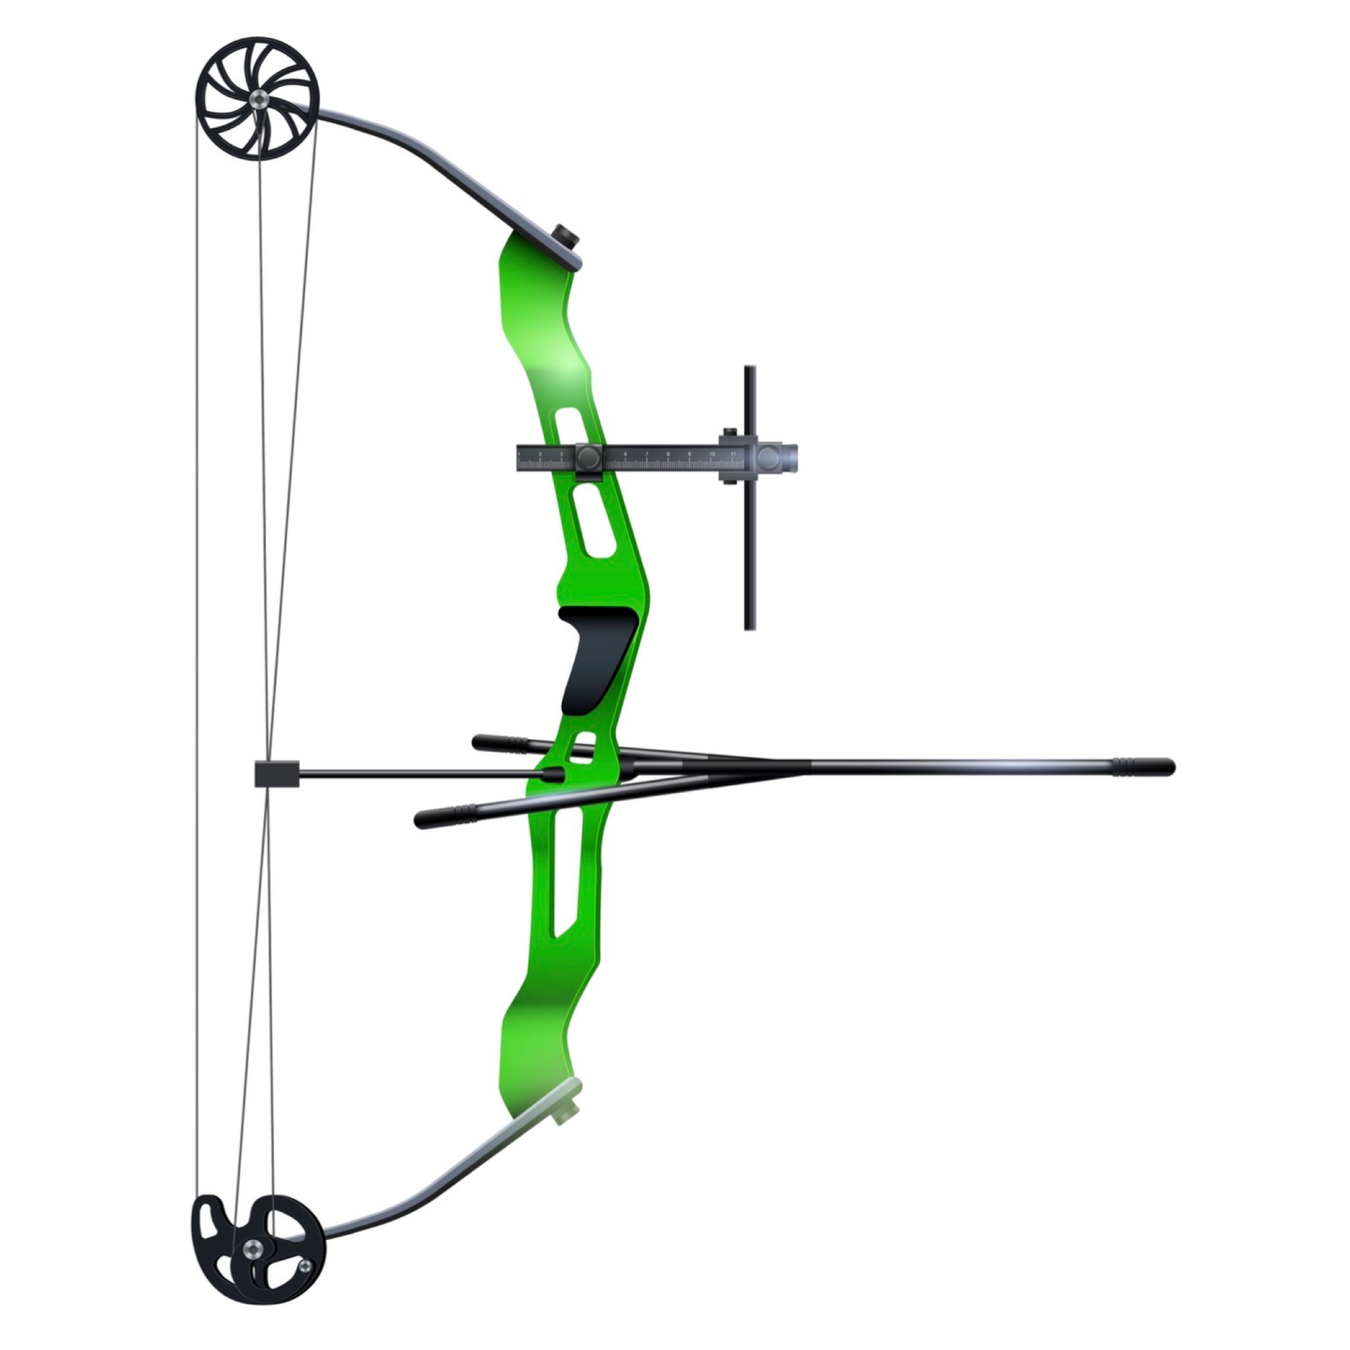 Archery Equipment